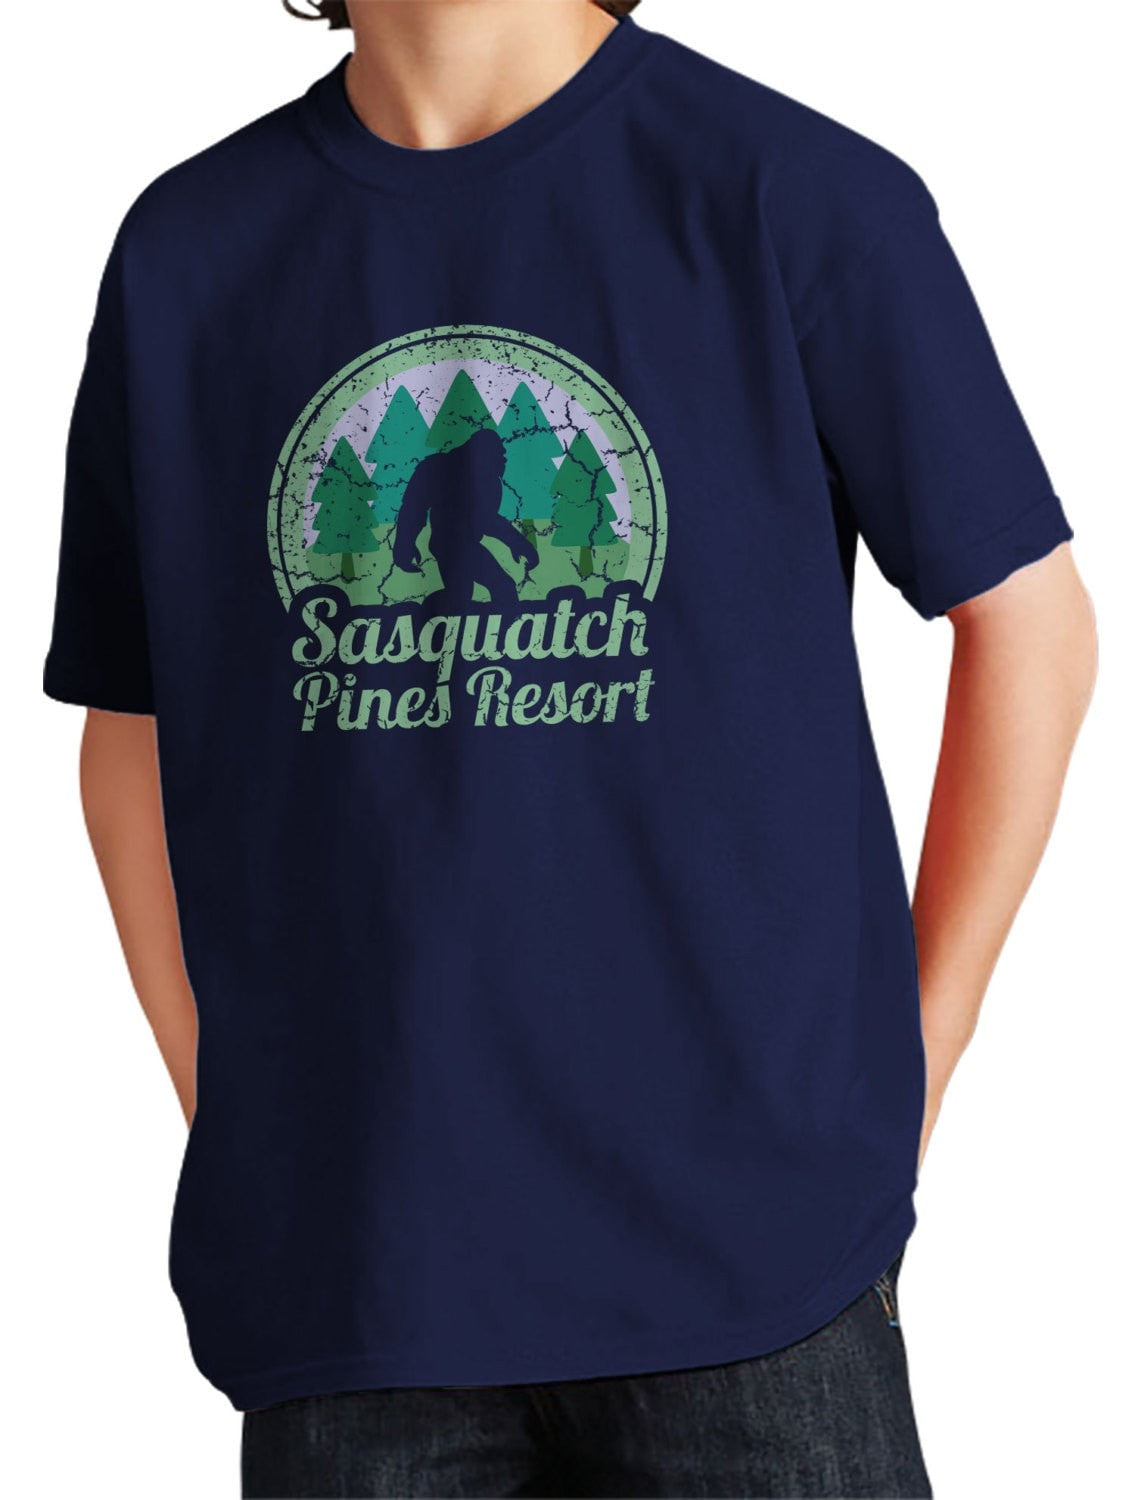 Girl's Sasquatch Pines Resort T-Shirt - Unisex Fit Bigfoot